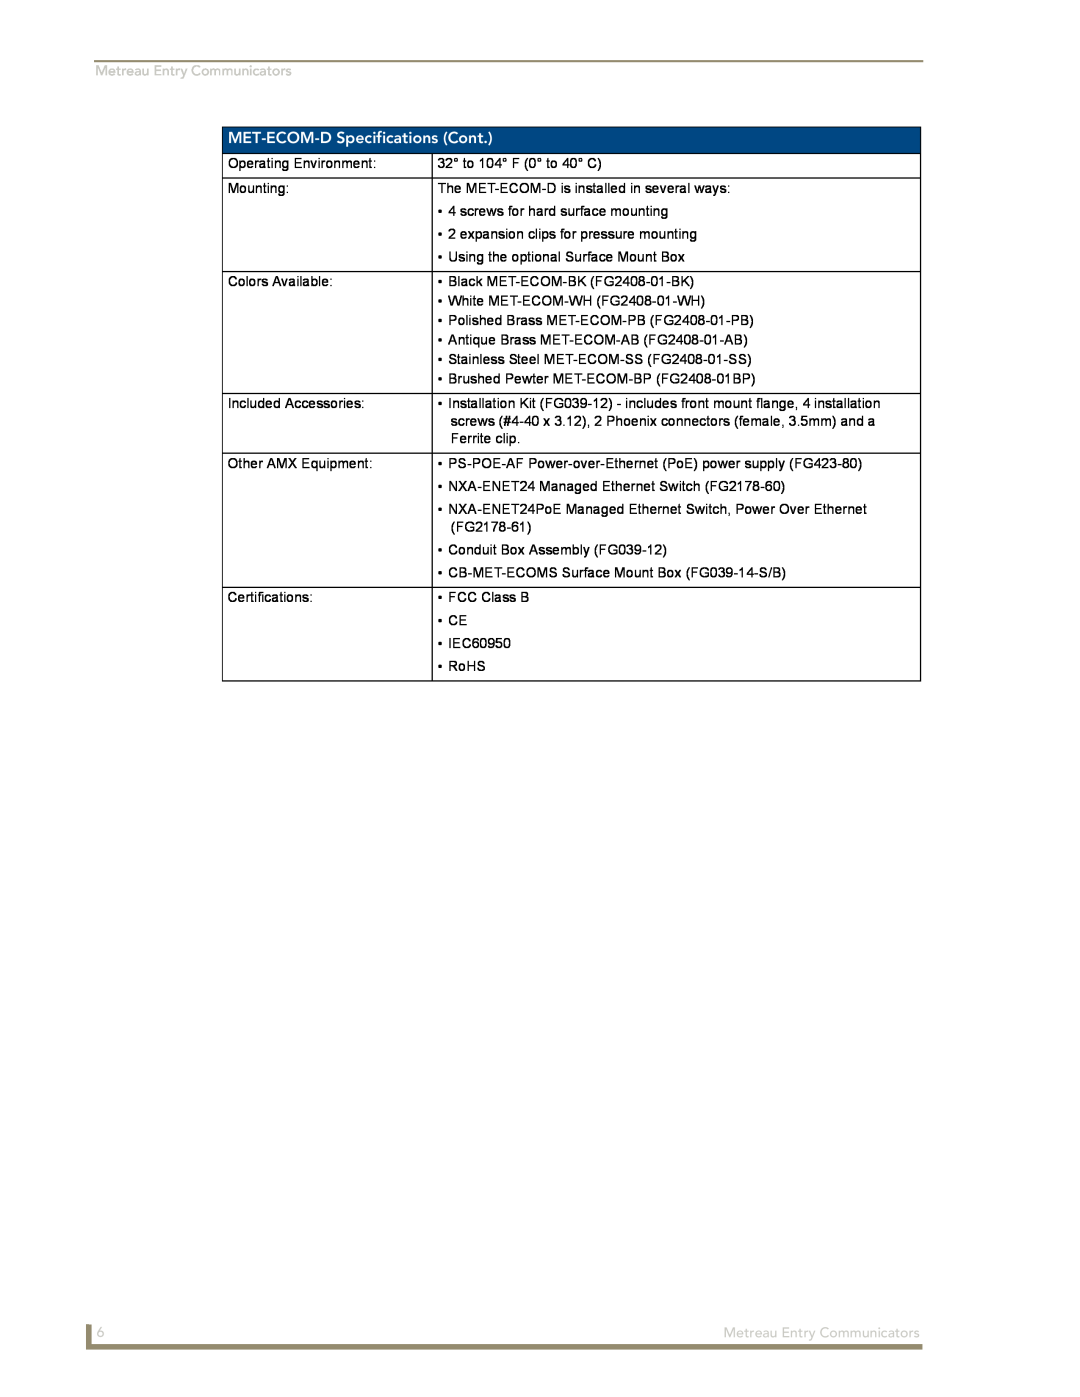 AMX manual MET-ECOM-DSpecifications Cont, Metreau Entry Communicators 